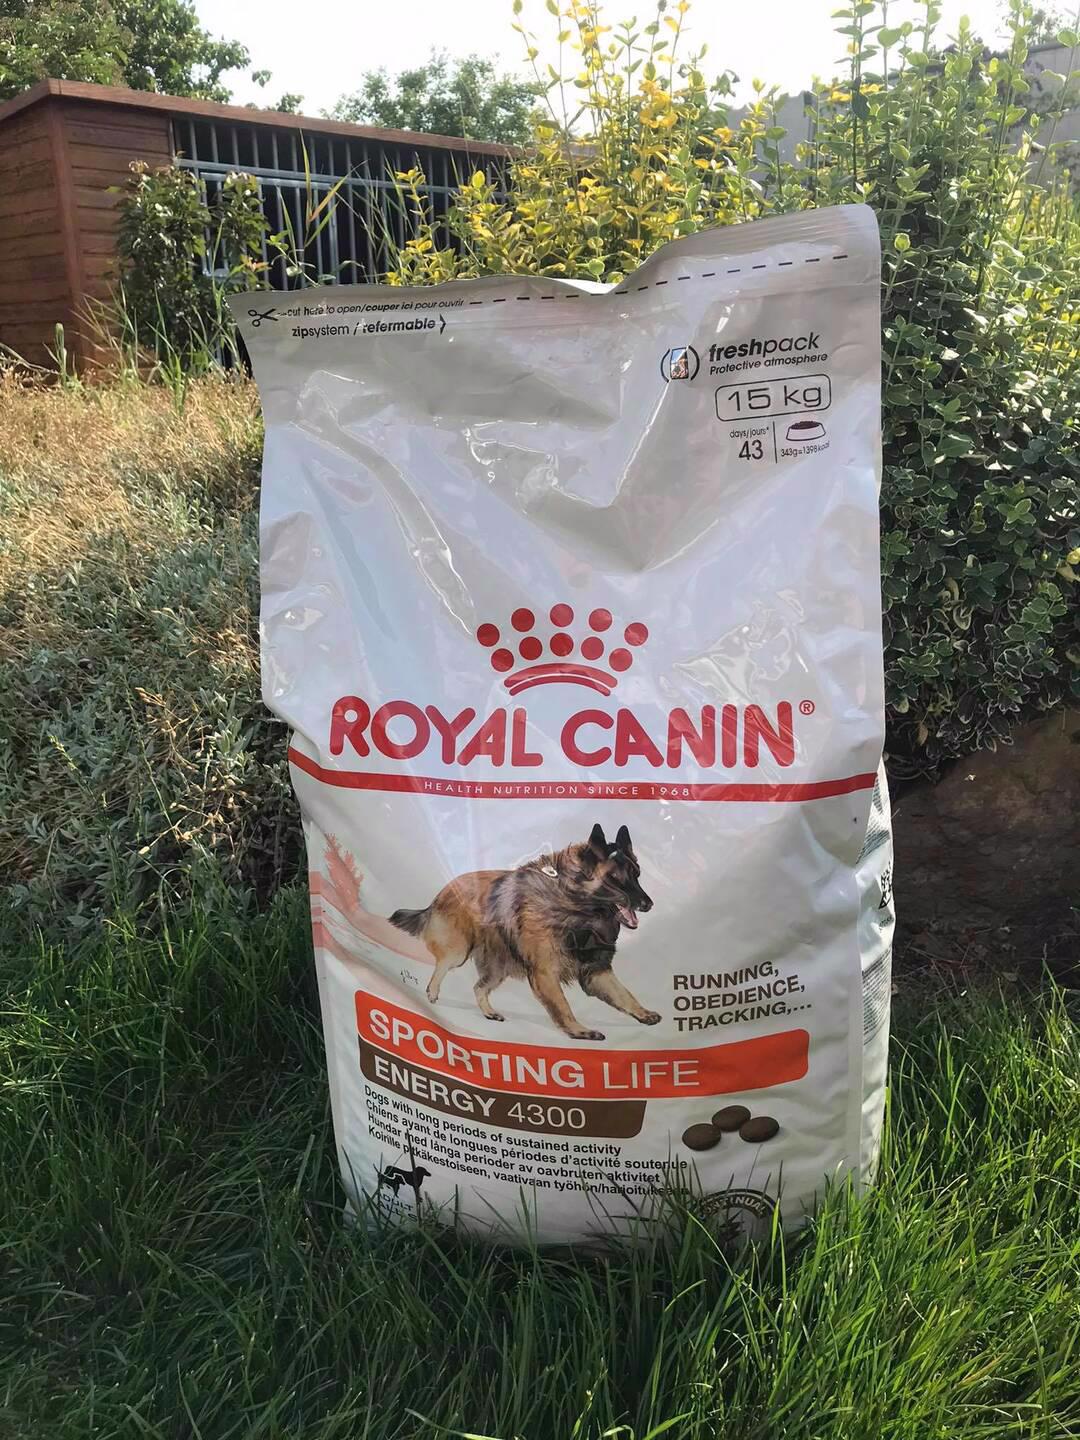 Royal Canin Sporting Life Trail 4300 15kg - foto 1